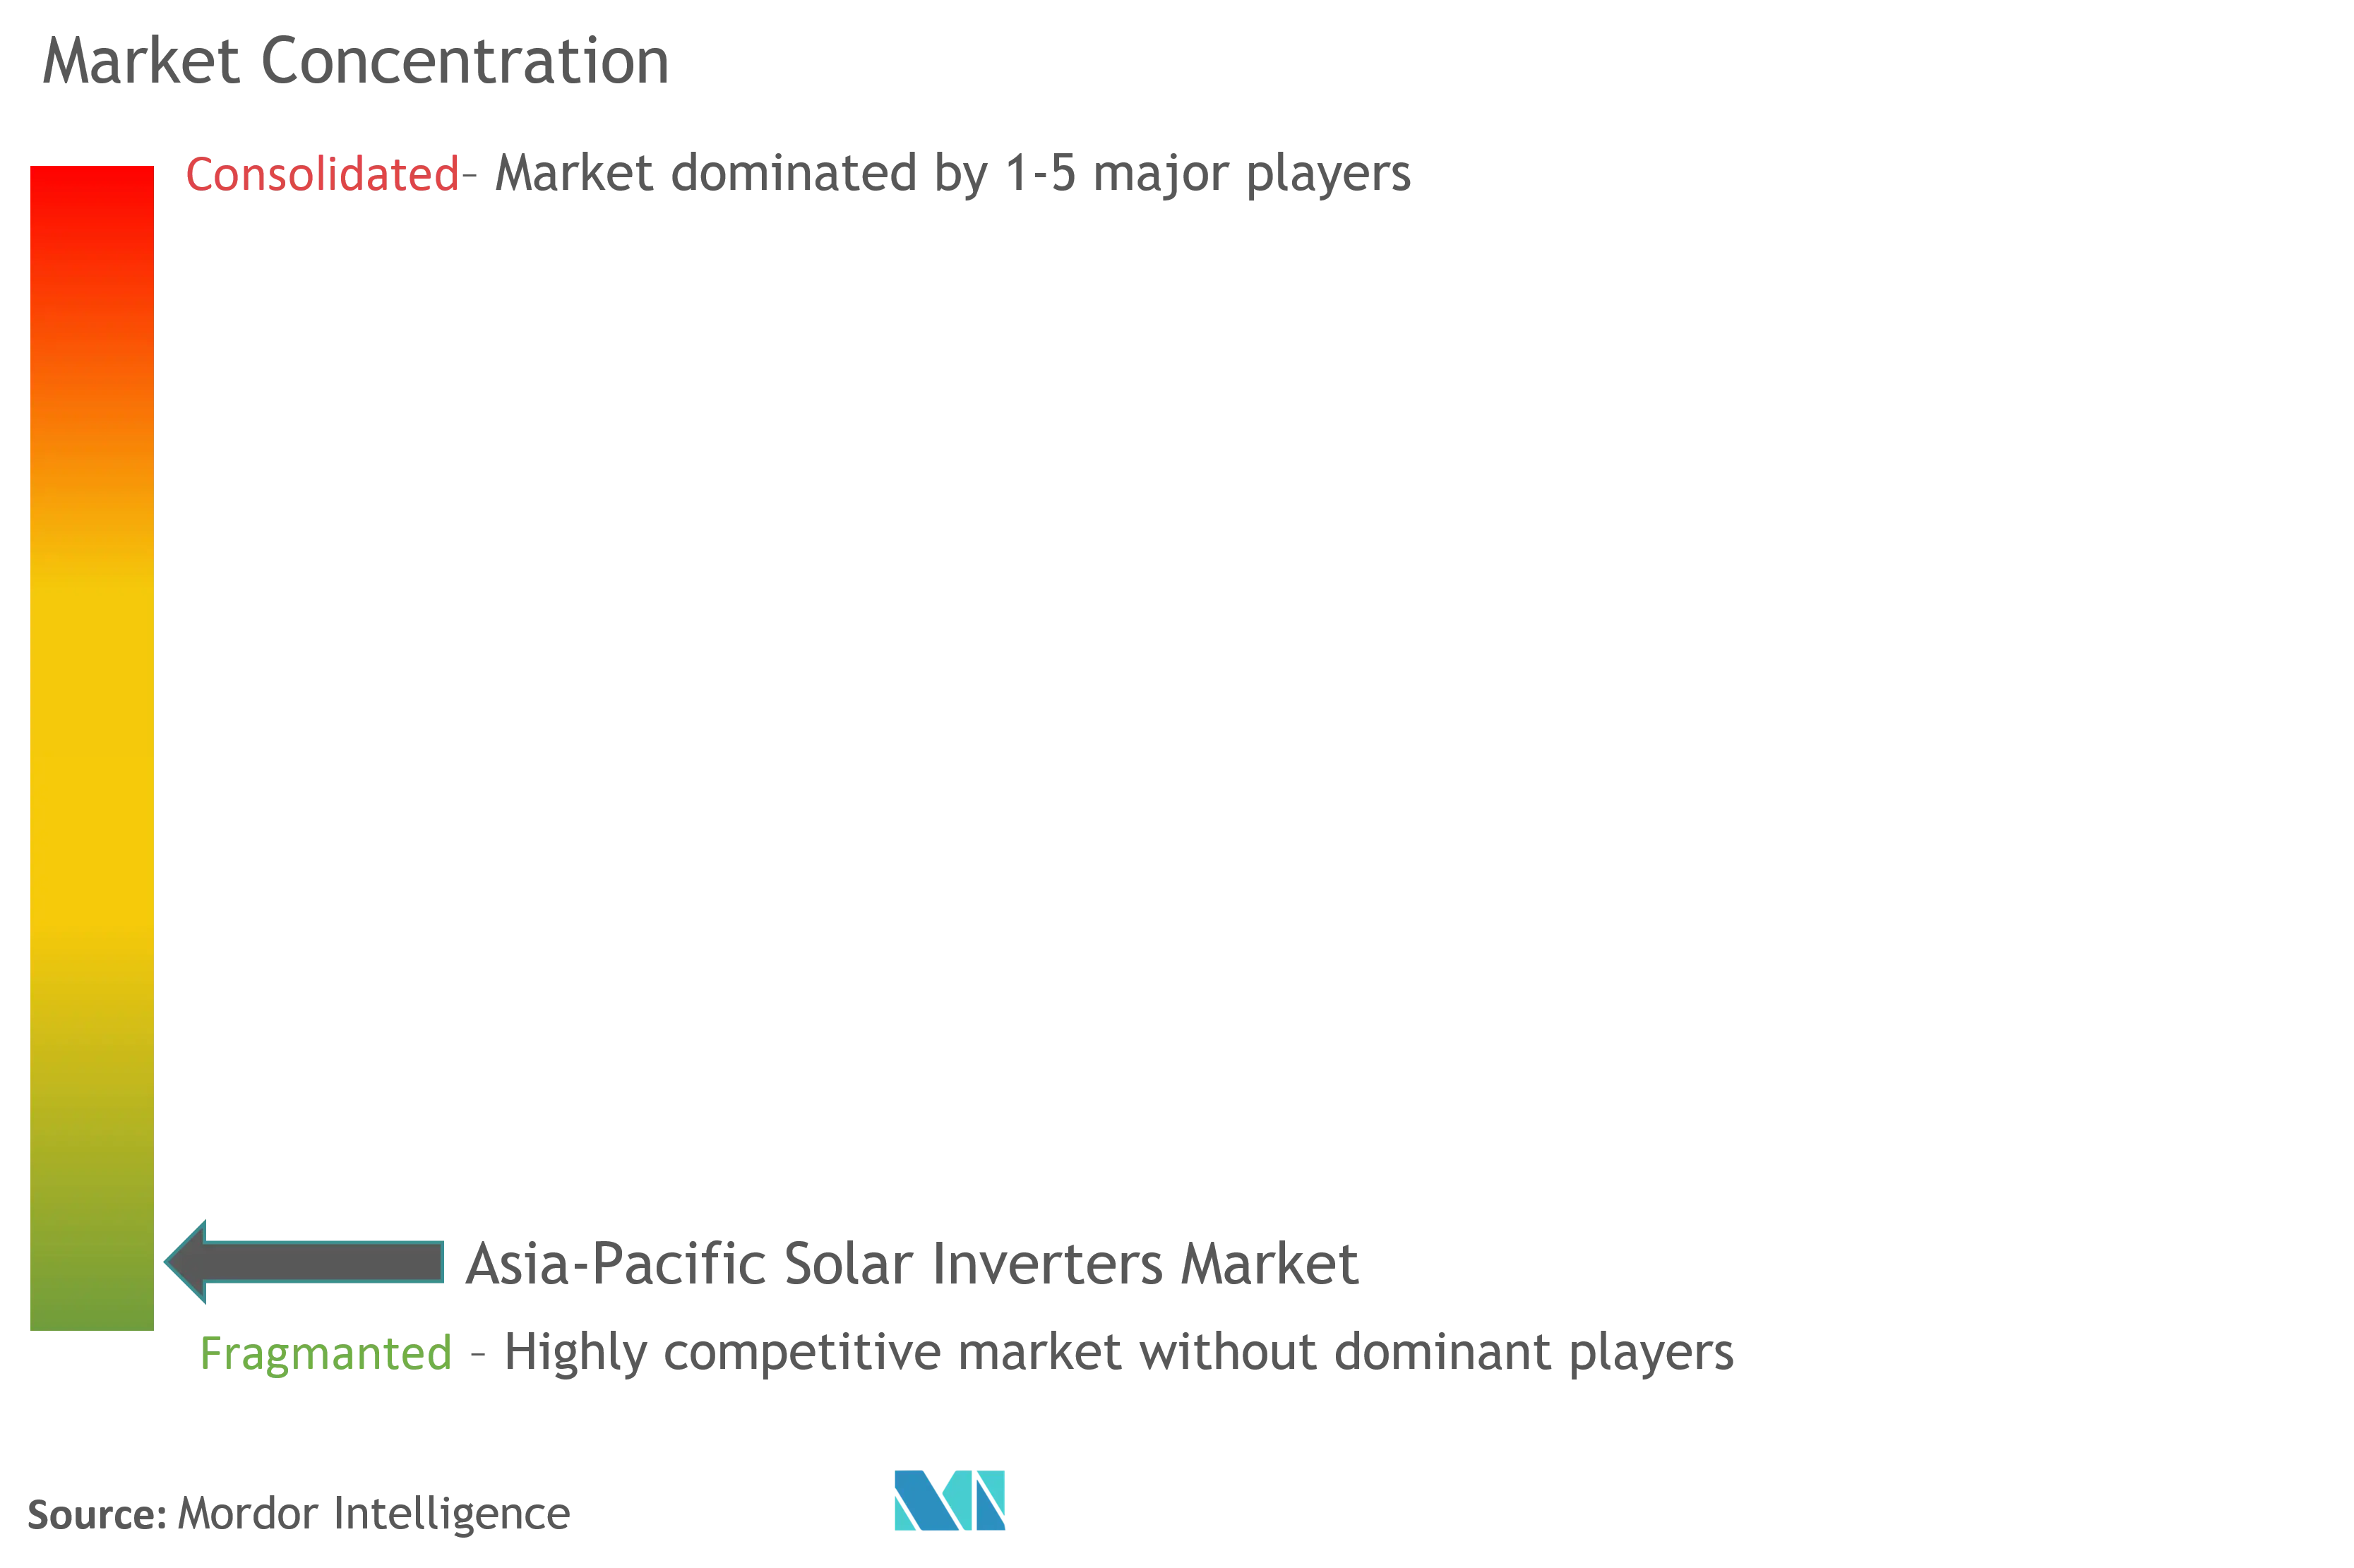 Asia-Pacific Solar Inverter Market Concentration